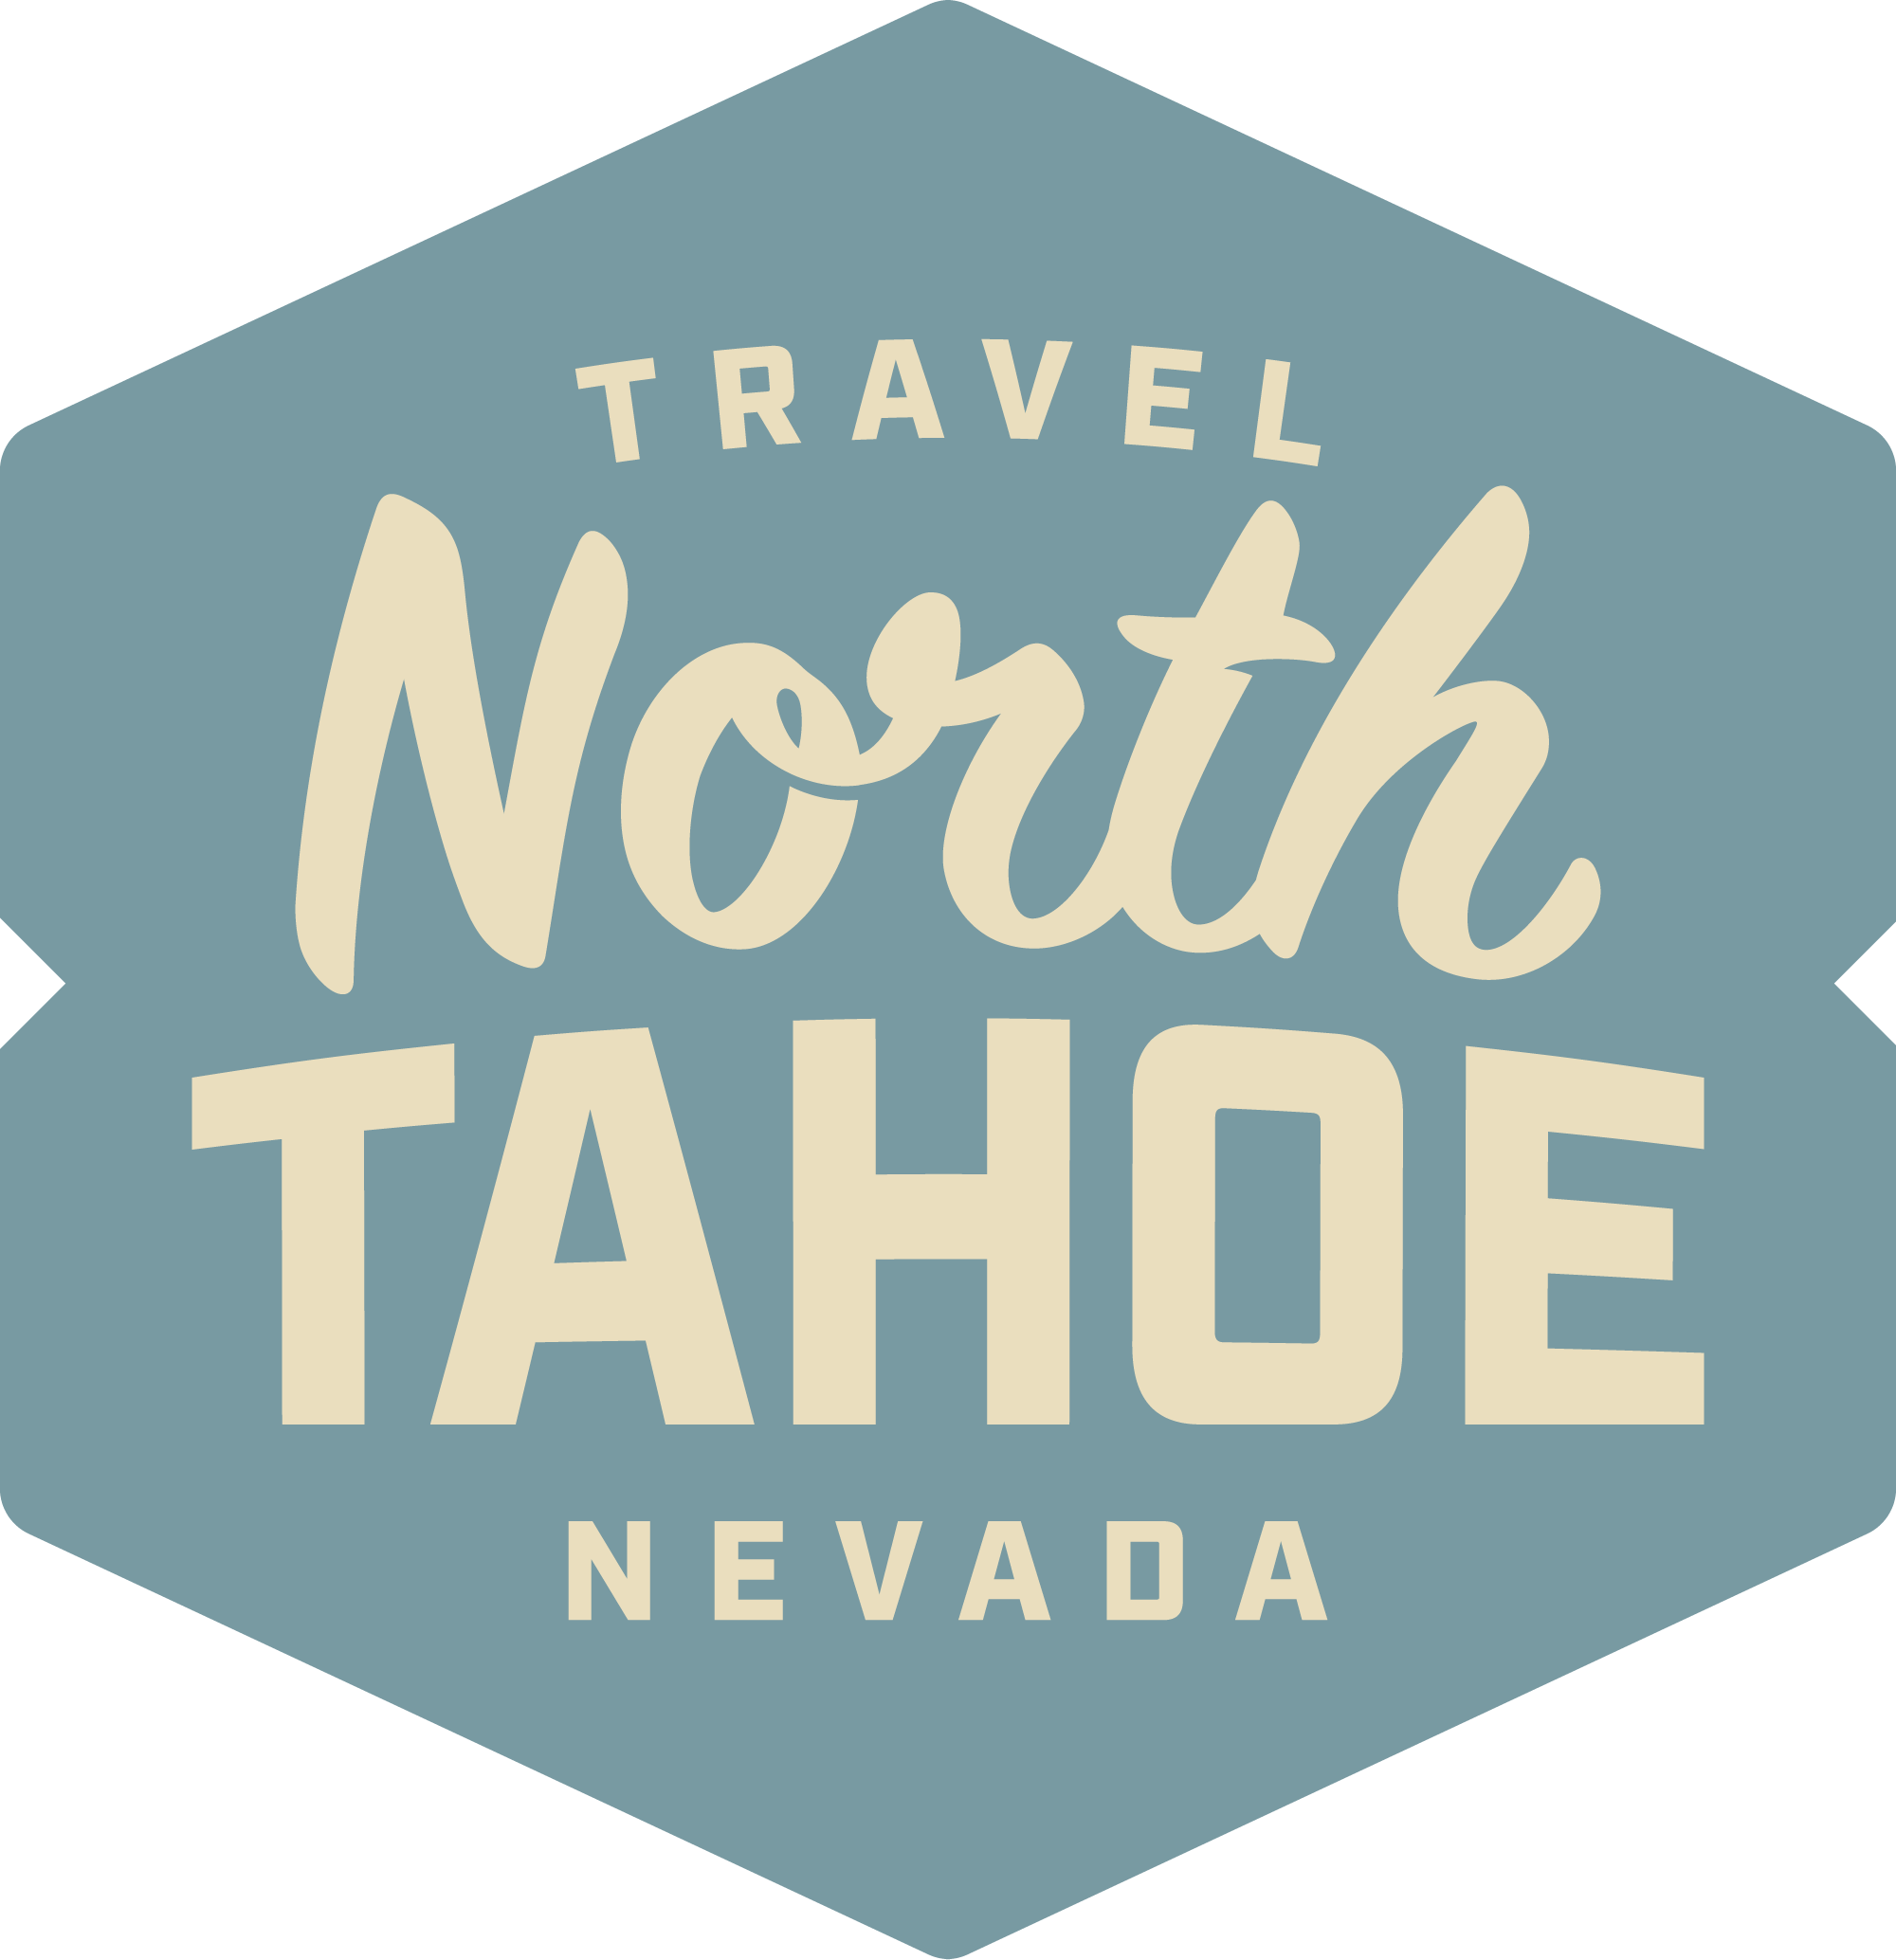 Travel North Tahoe Nevada logo